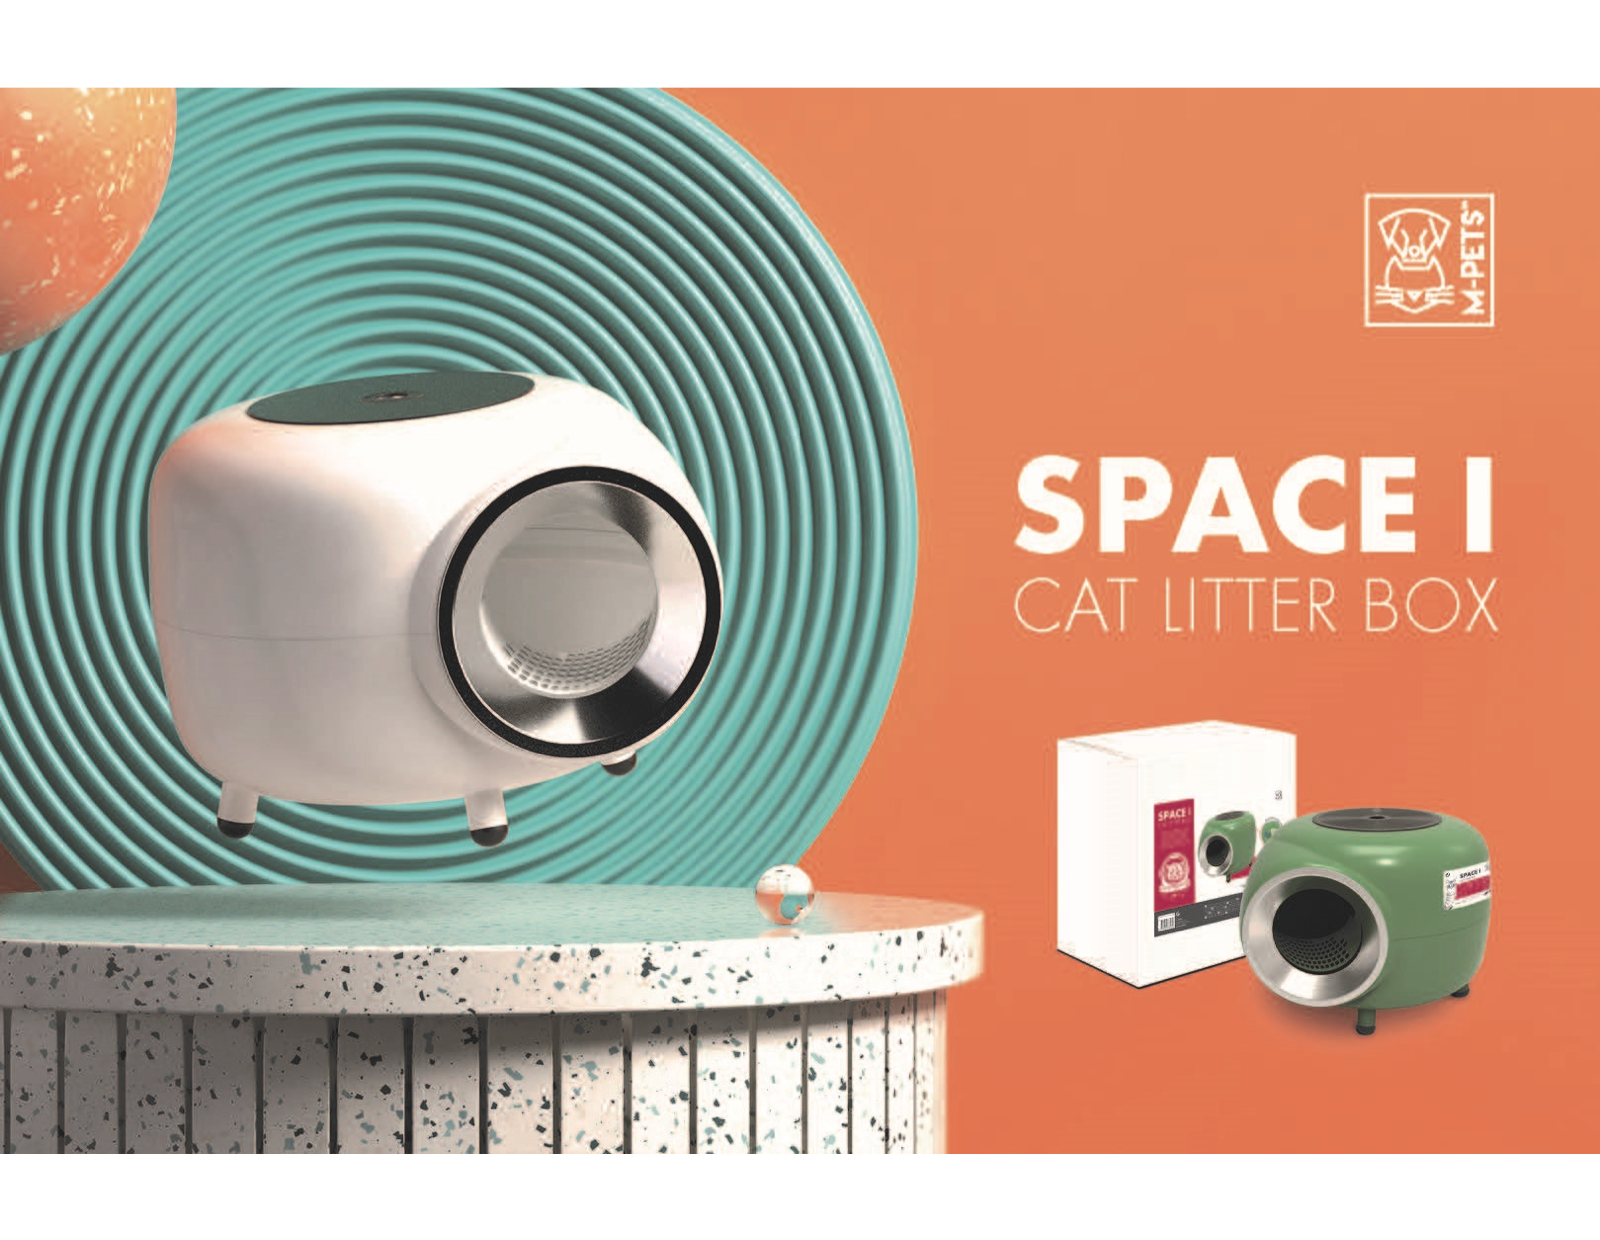 Space I Cat Litter Box